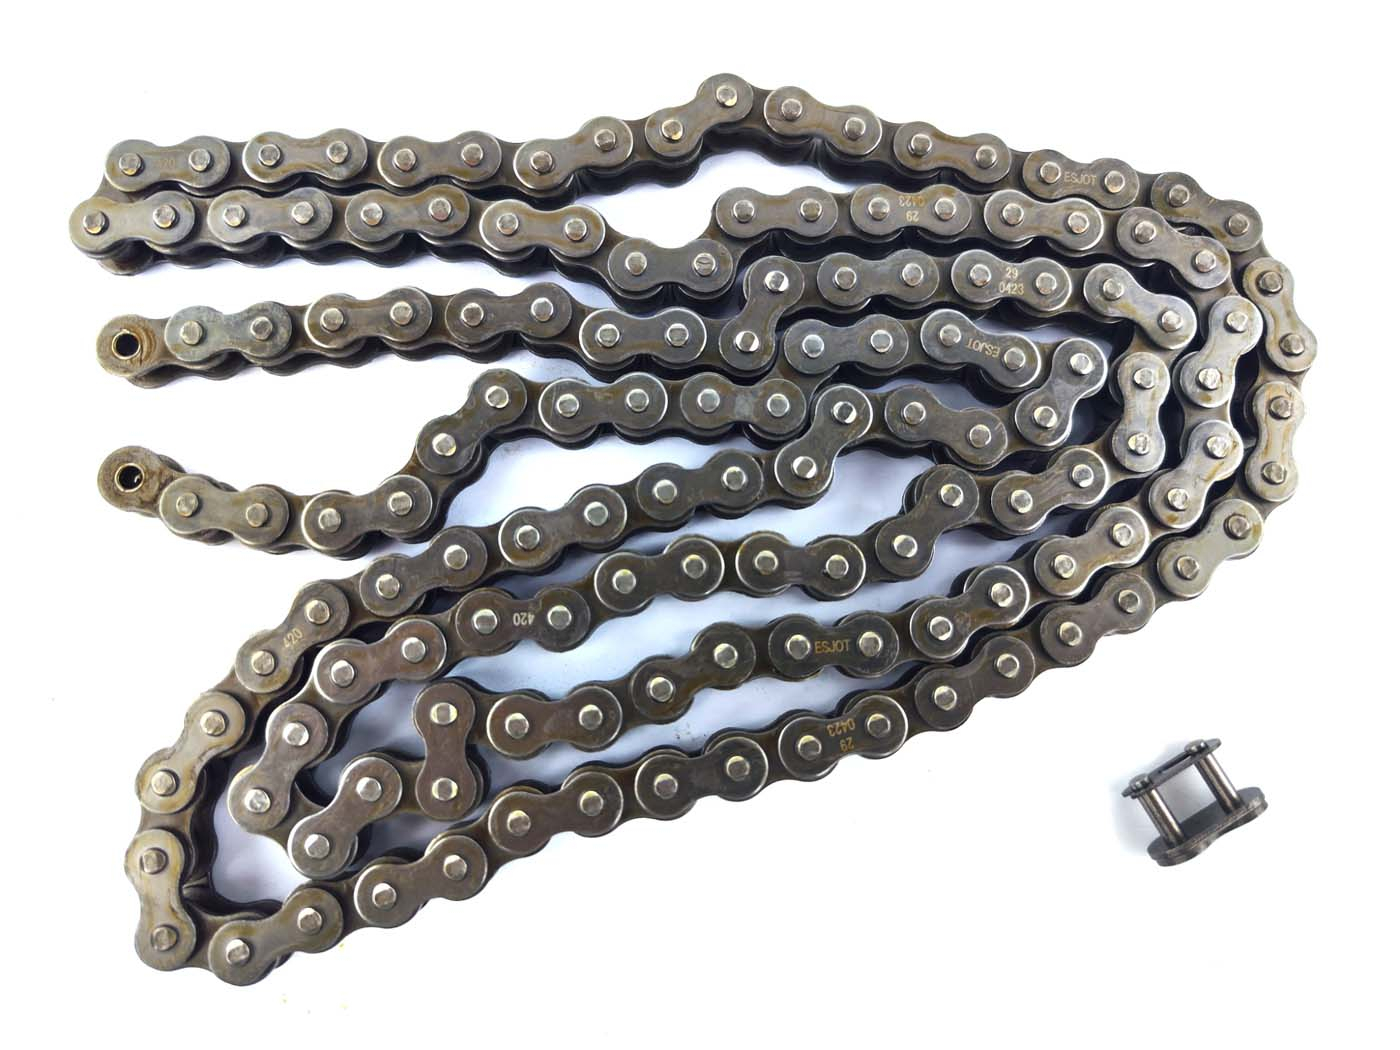 Esjot Chain, Reinforced, 140 Links For Motorcycle Moped